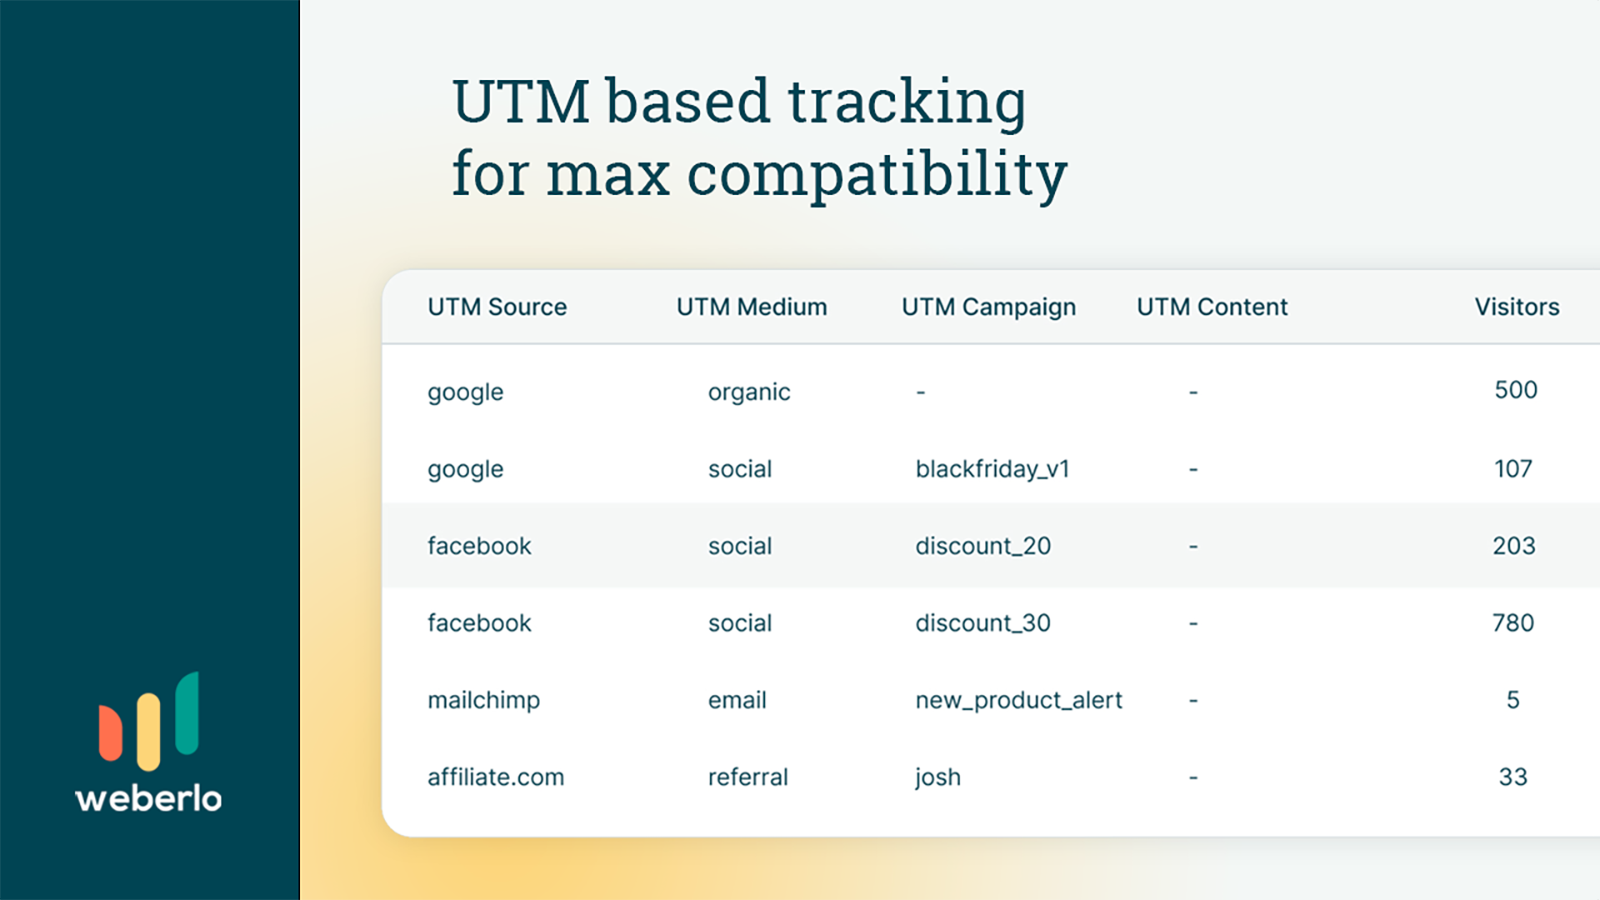 UTM based tracking for maximum compatibility